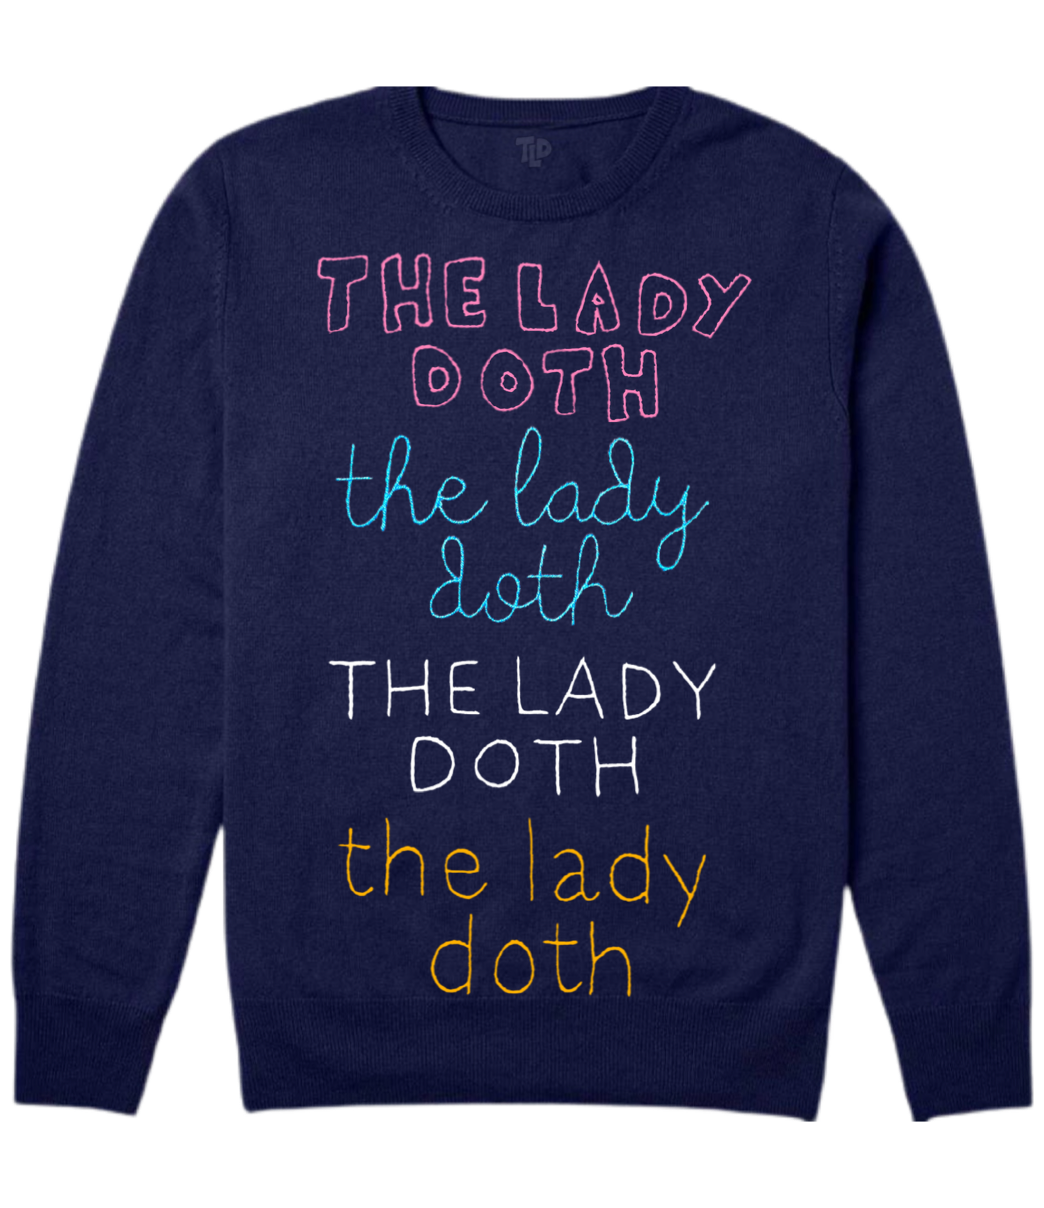 Custom NAVY 100% Cashmere Sweater, Custom Cashmere, The Lady Doth